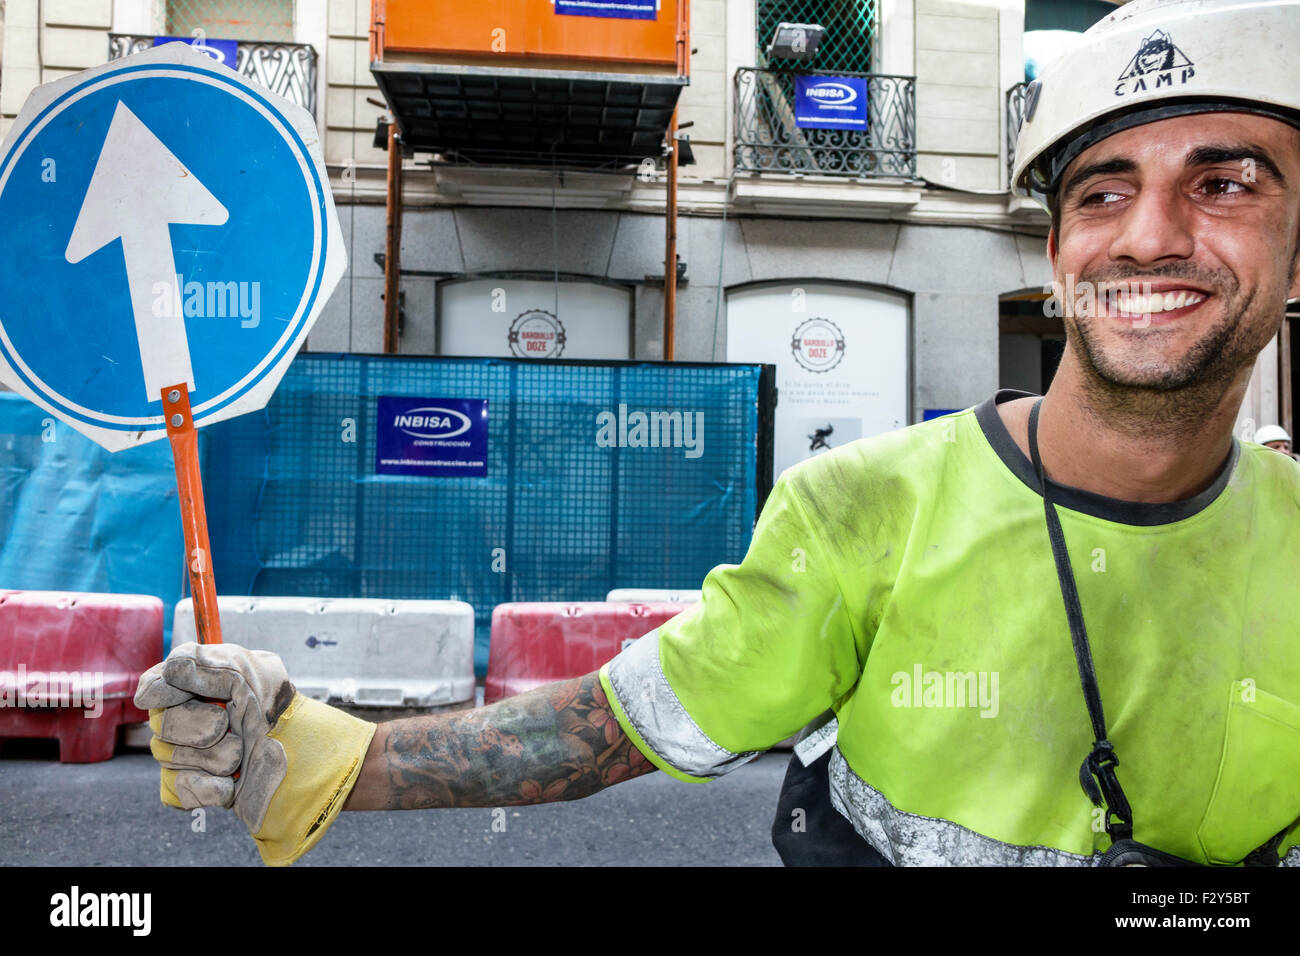 Madrid Spain,Hispanic Centro,Hispanic man men male,construction worker,job,directing traffic,sign,arrow,hard hat,Spain150701124 Stock Photo